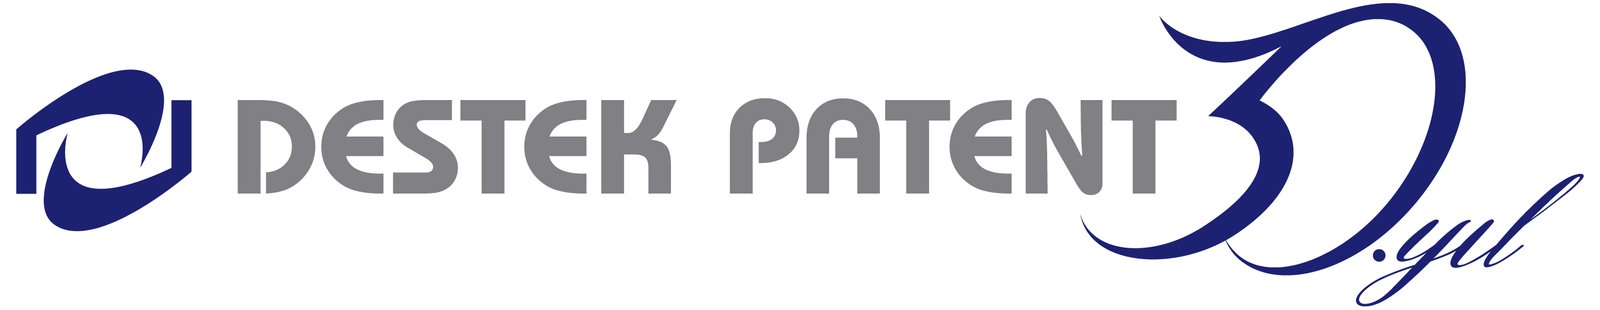 DestekPatent_30.yil_logo